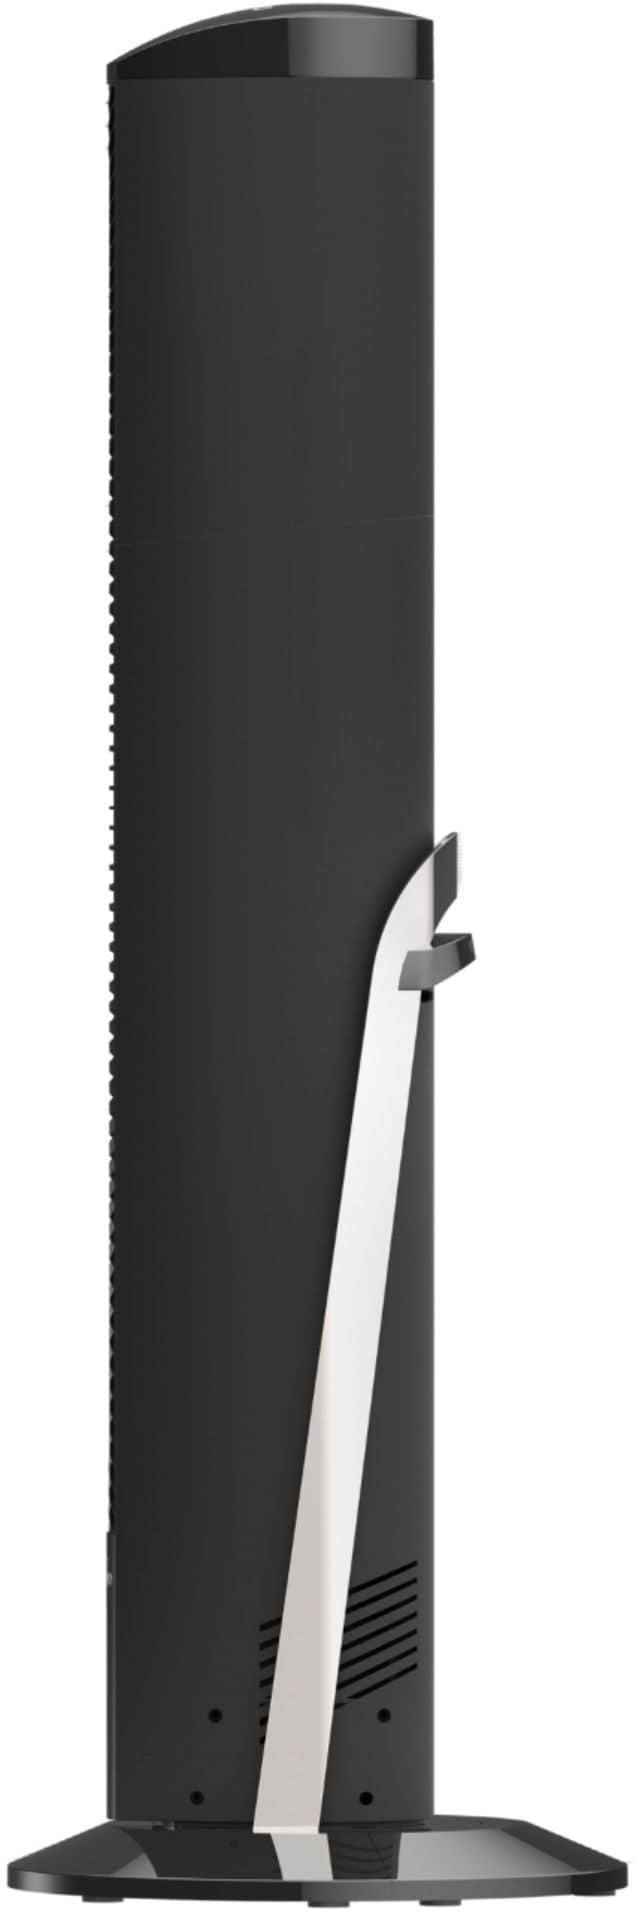 Vornado - OSCR37 Oscillating Tower Fan with Remote - Black_5